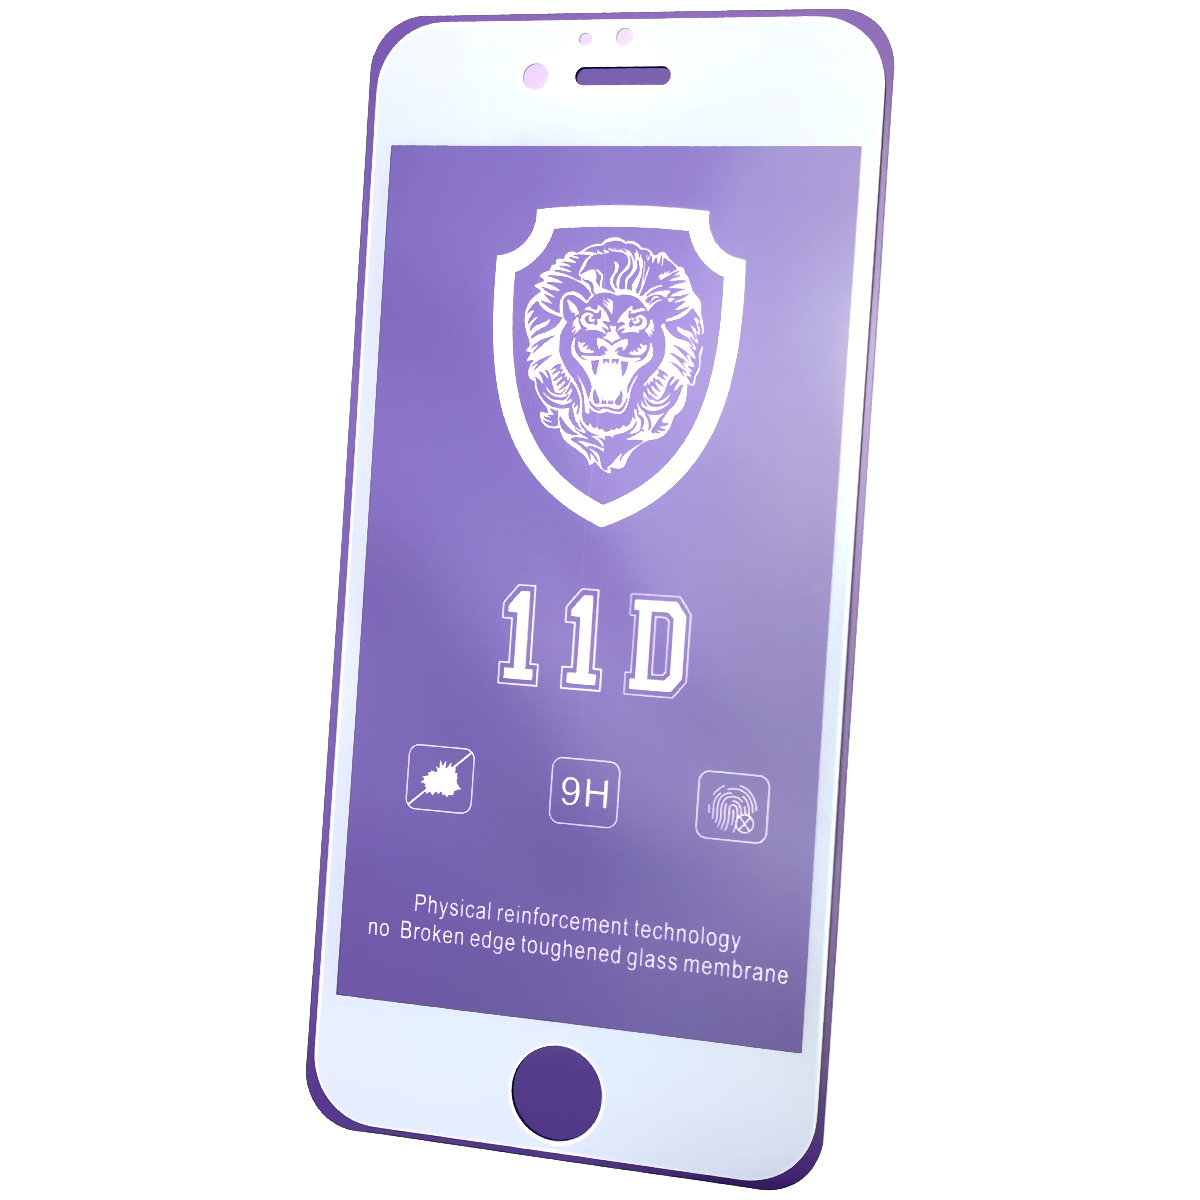 Защитное стекло 11D LION FULL GLUE для APPLE iPhone 6, iPhone 6G, iPhone 6S, цвет окантовки белый.